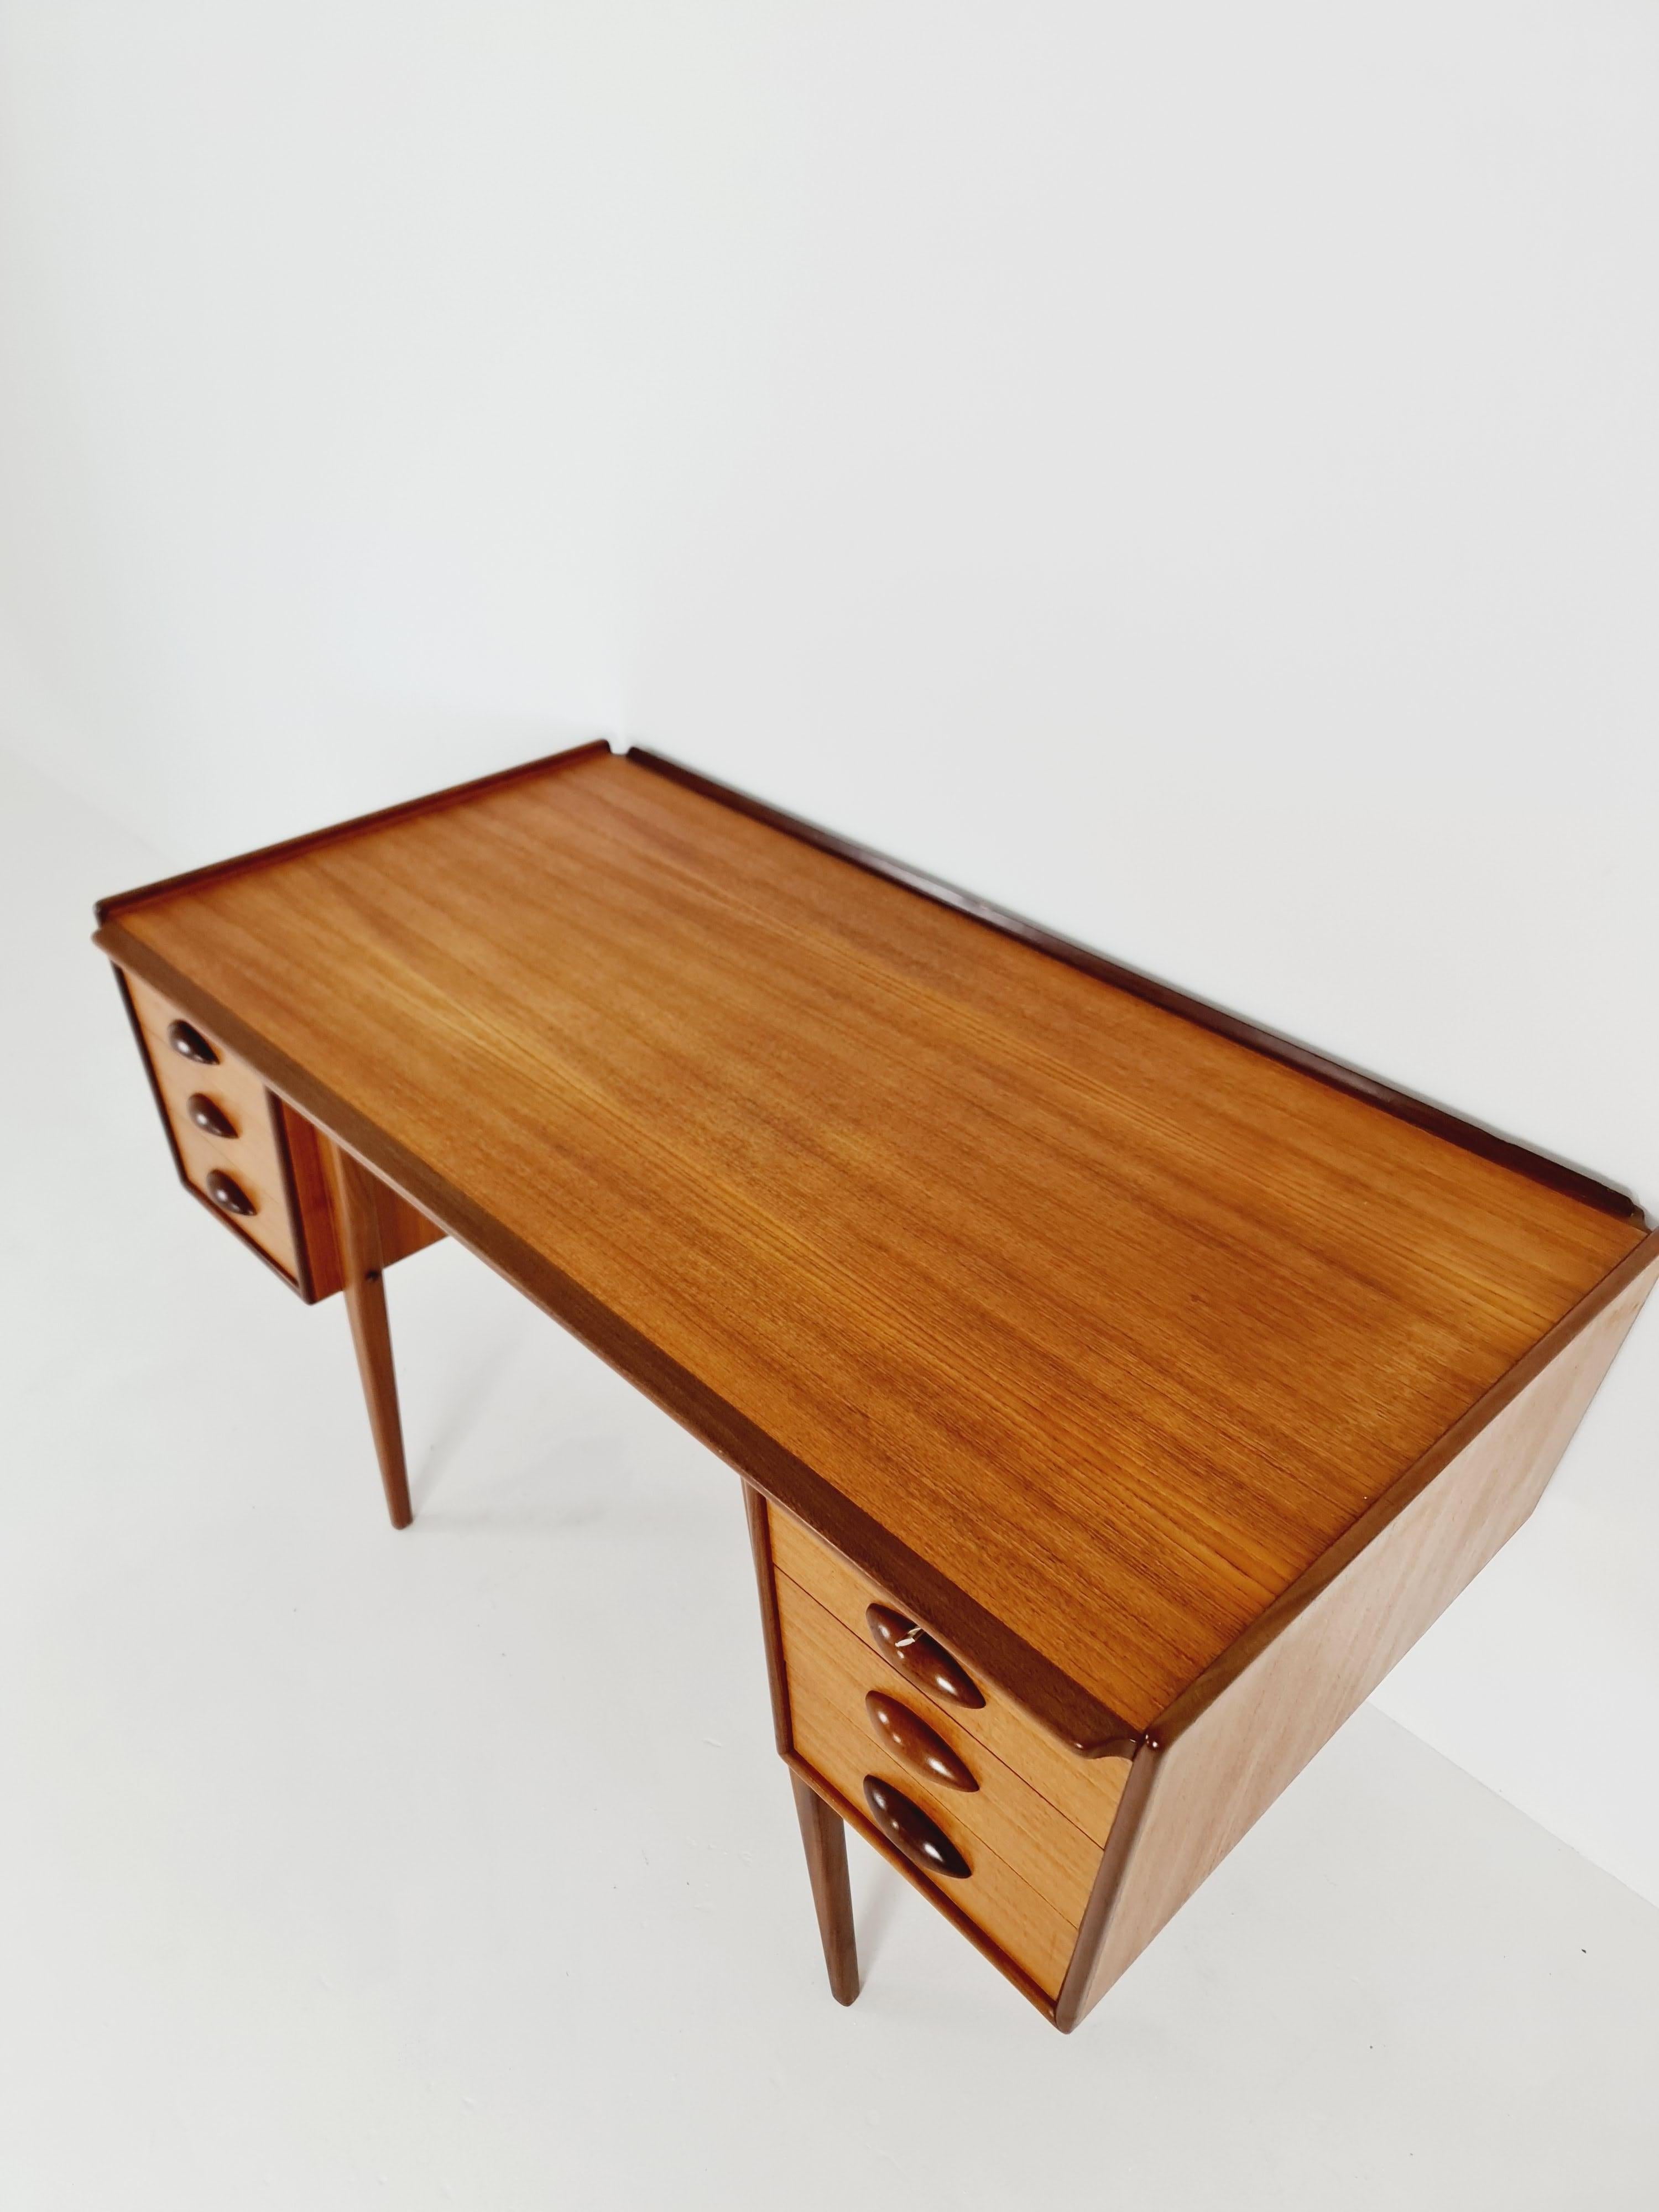 Midcentury Scandinavian Desk in Teak by Svante Skogh, 1960s For Sale 2